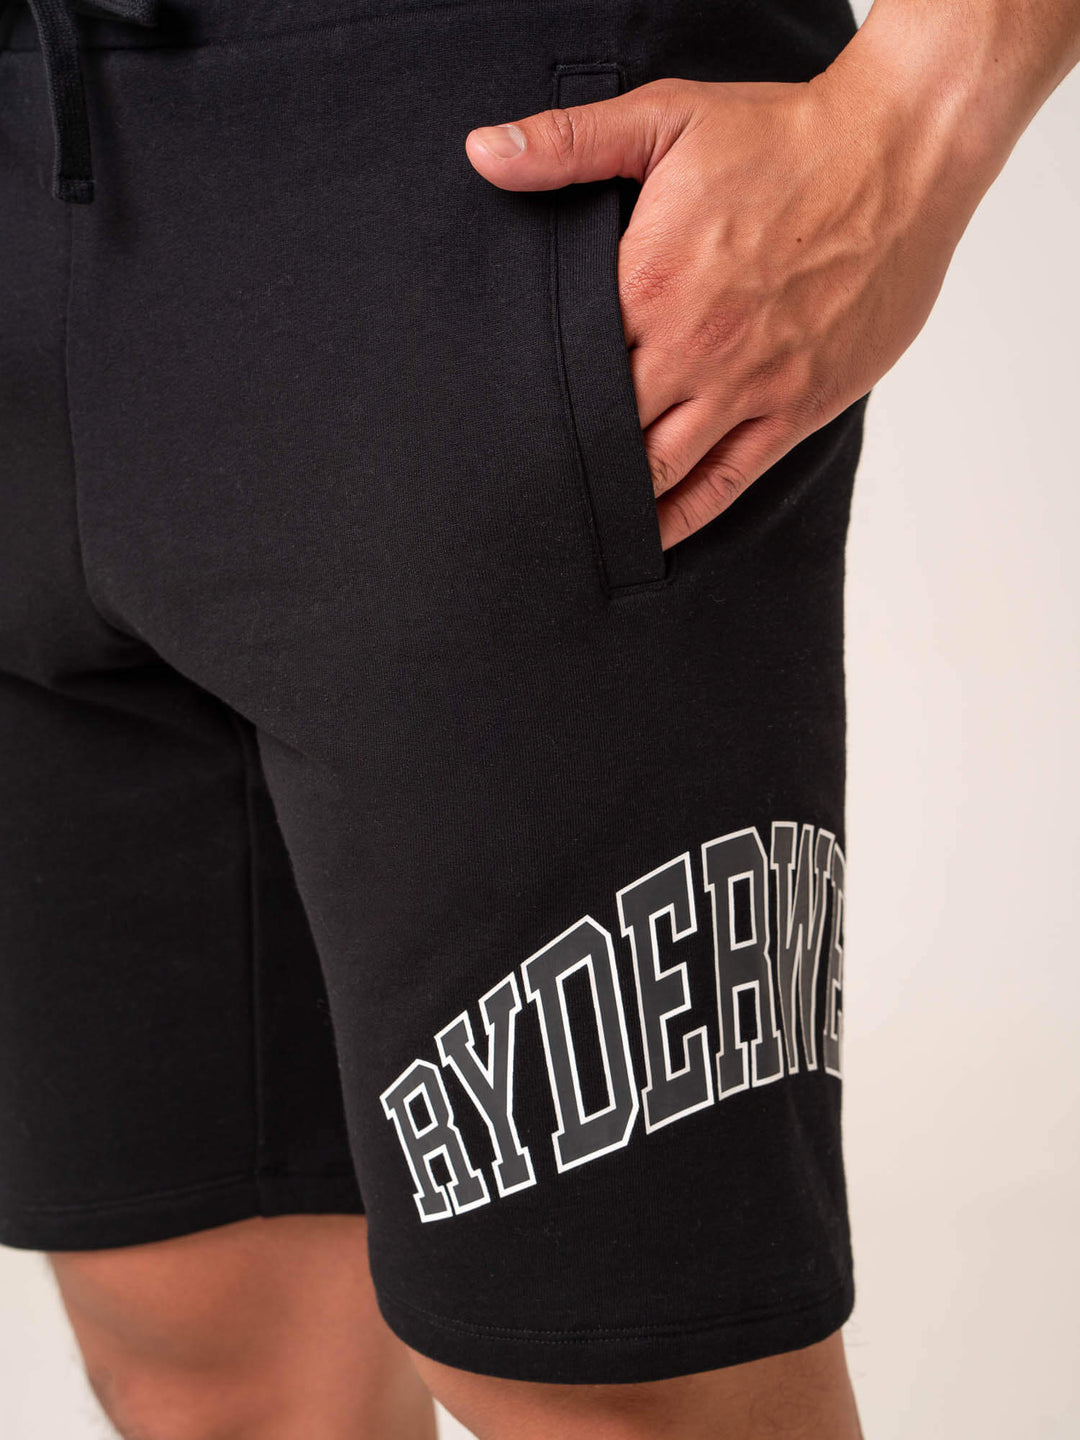 Men's Collegiate Track Short - Black Clothing Ryderwear 